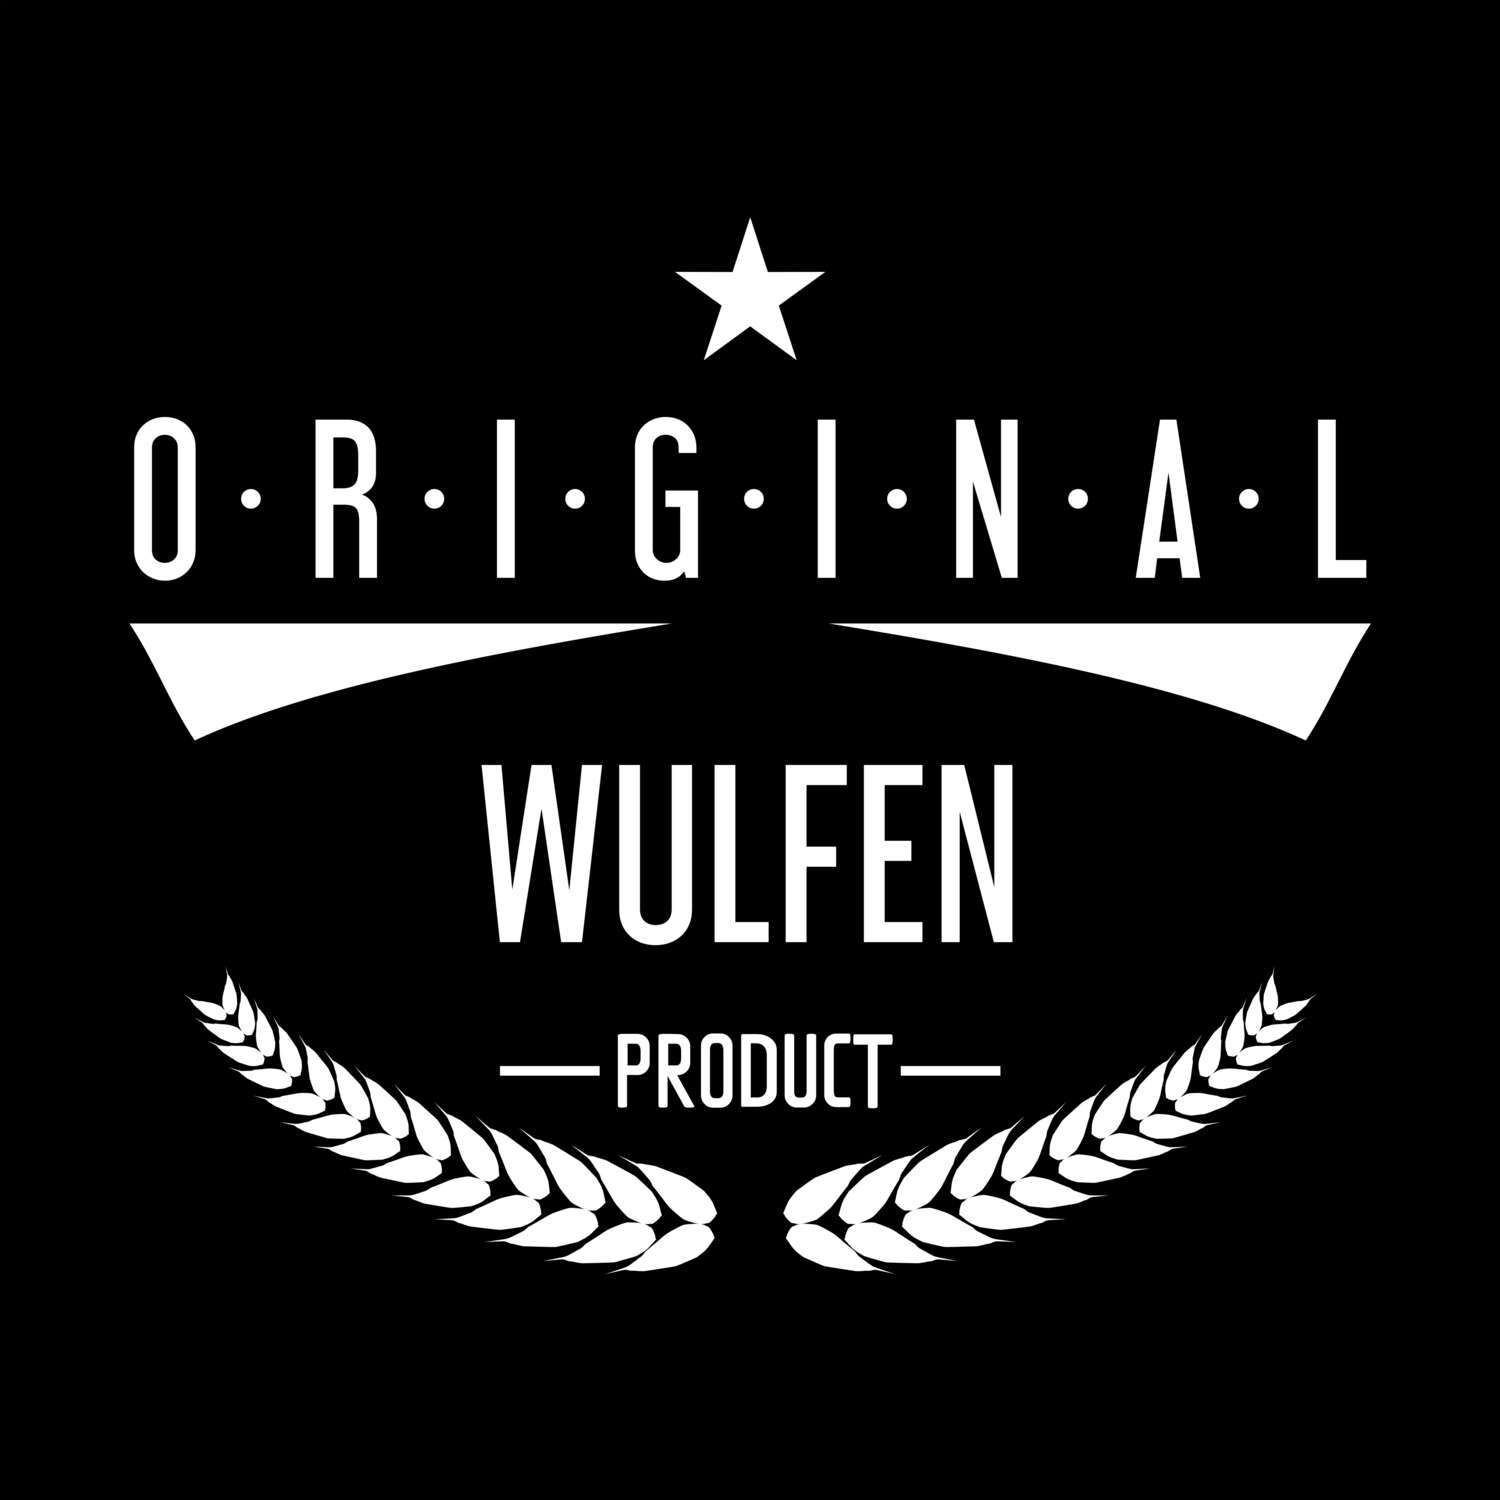 Wulfen T-Shirt »Original Product«